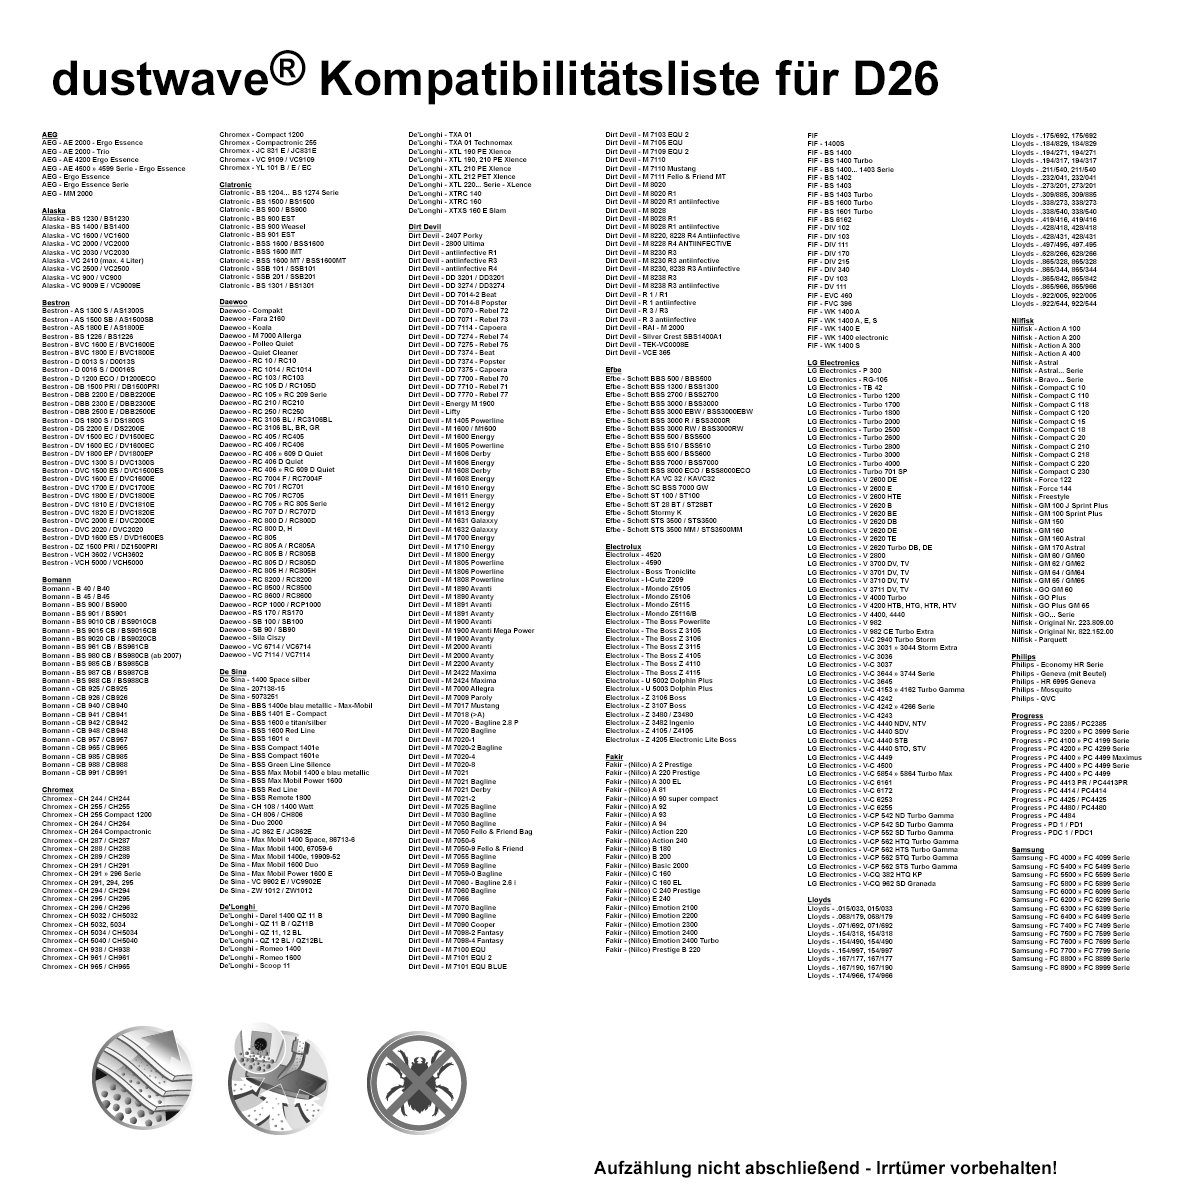 + Dustwave 15x15cm zuschneidbar) / 1 Test-Set, Staubsaugerbeutel für Hepa-Filter 1 (ca. Bestron 0016 D St., 1 D0016S, Test-Set, Staubsaugerbeutel passend - S